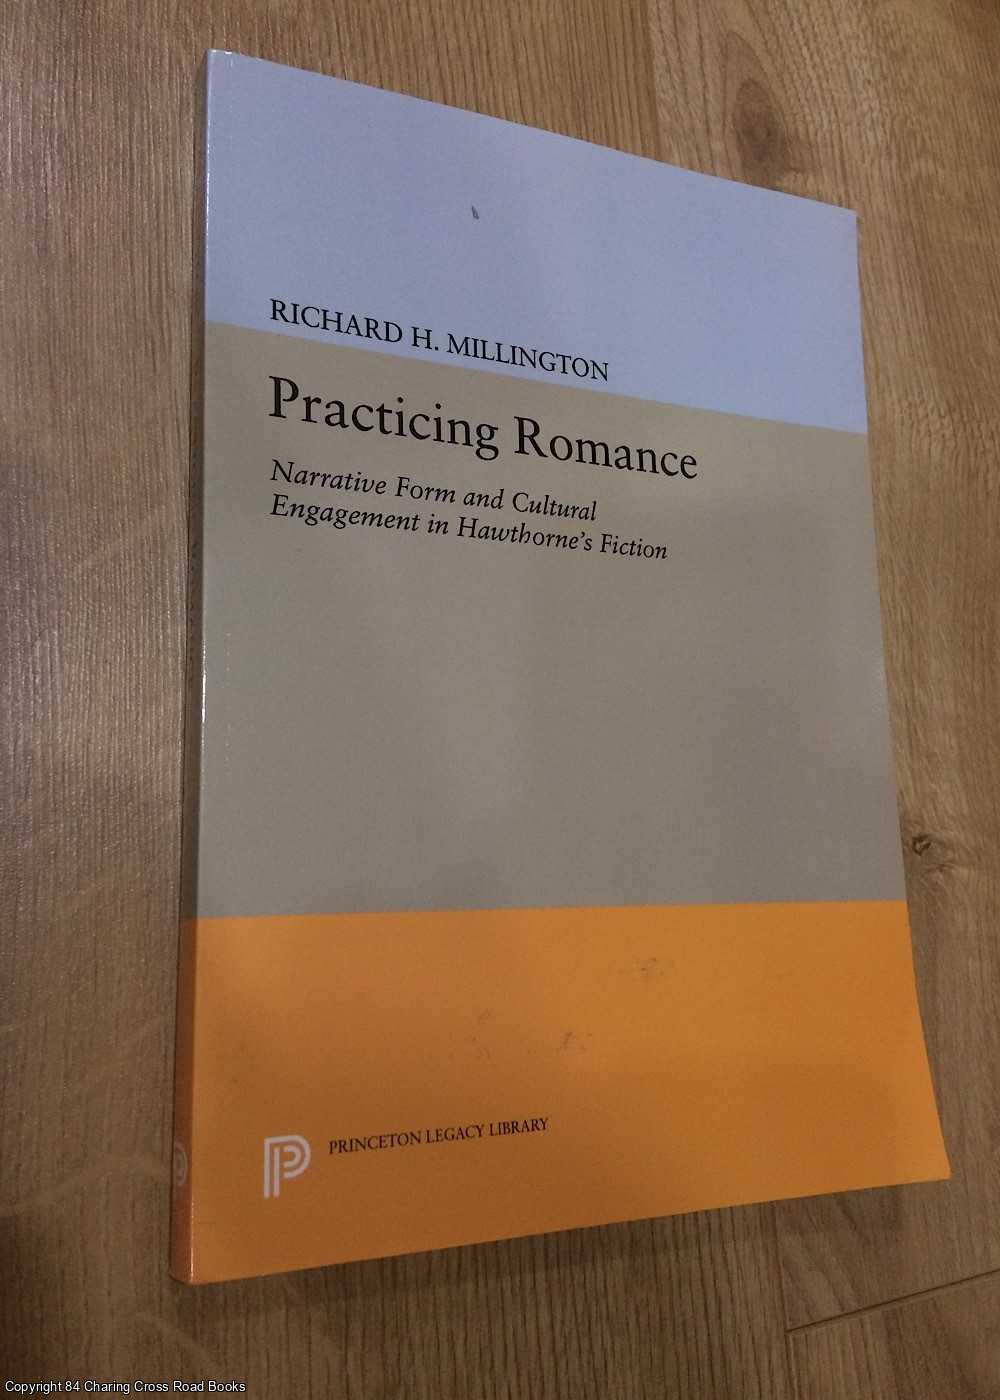 Millington, Richard - Practicing Romance: Narrative Form and Cultural Engagement in Hawthorne's Fiction